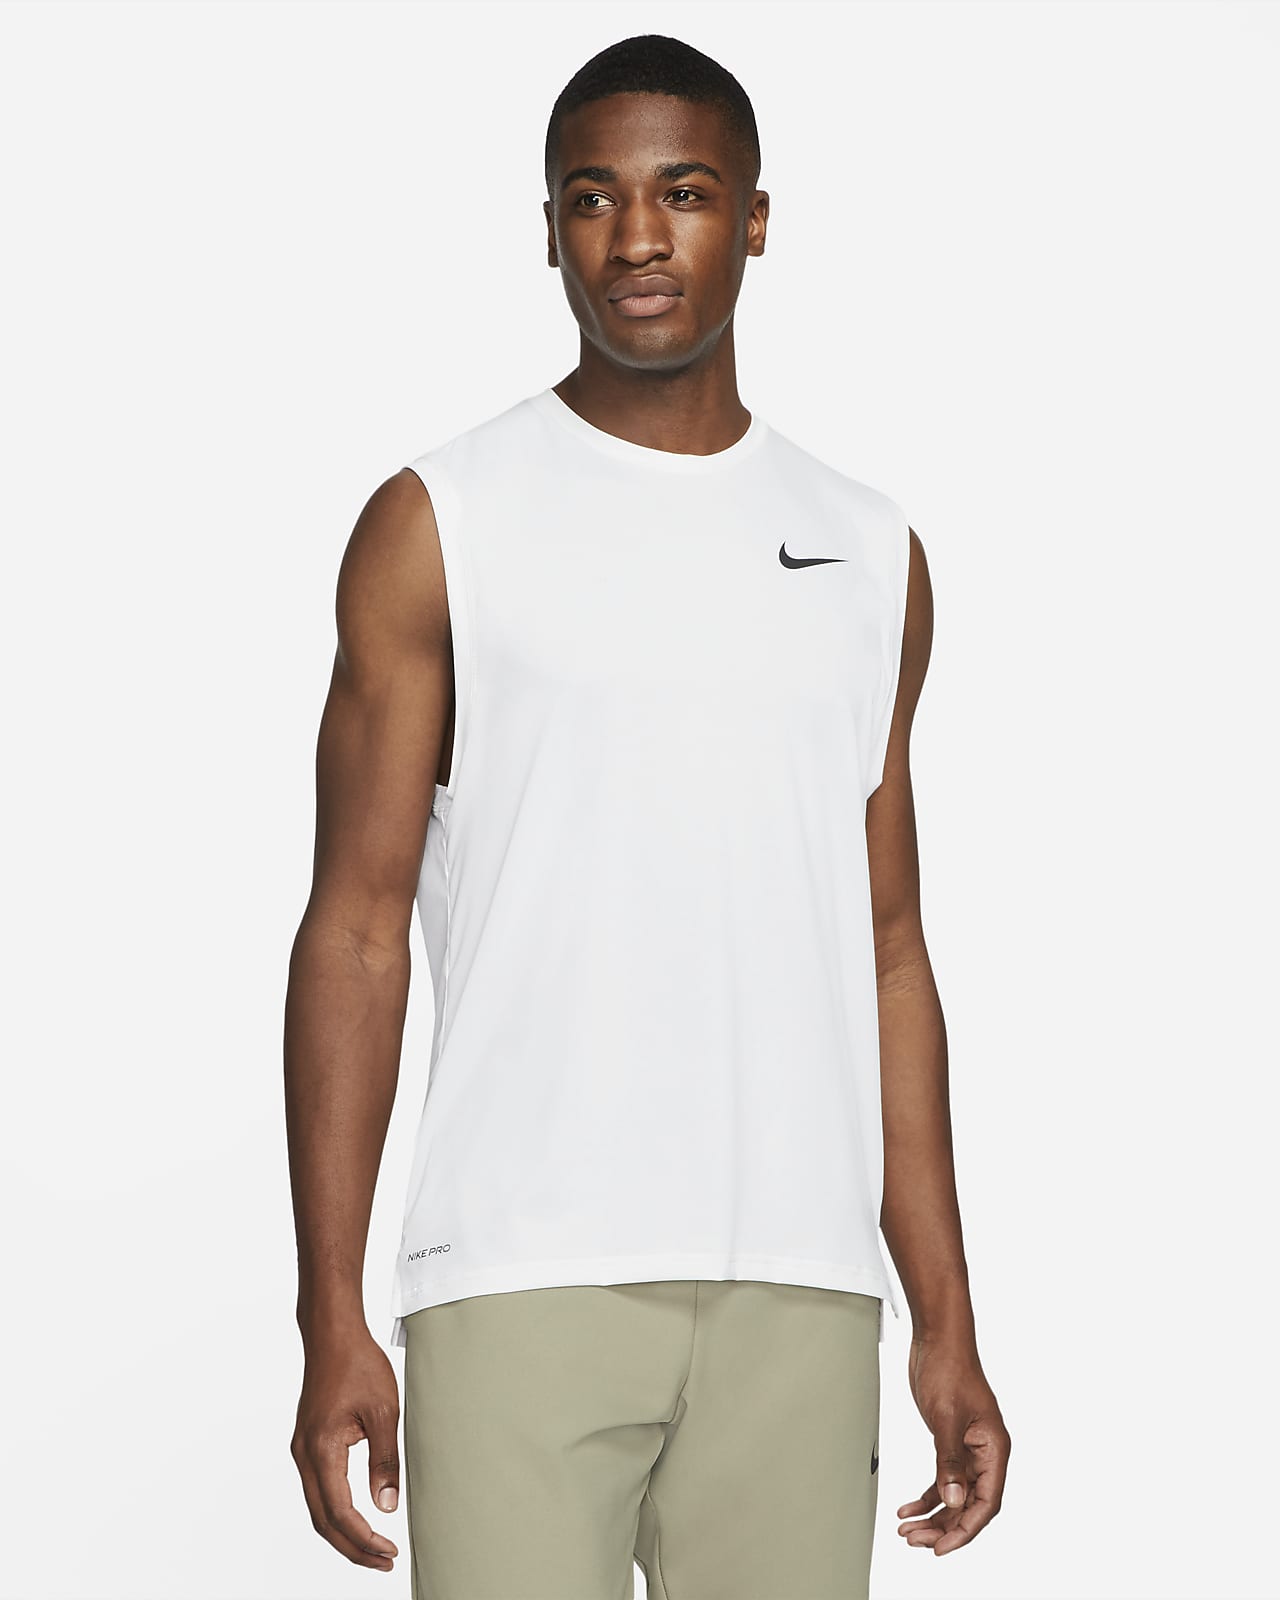 Camiseta sin mangas Dri-FIT para hombre Nike Pro.